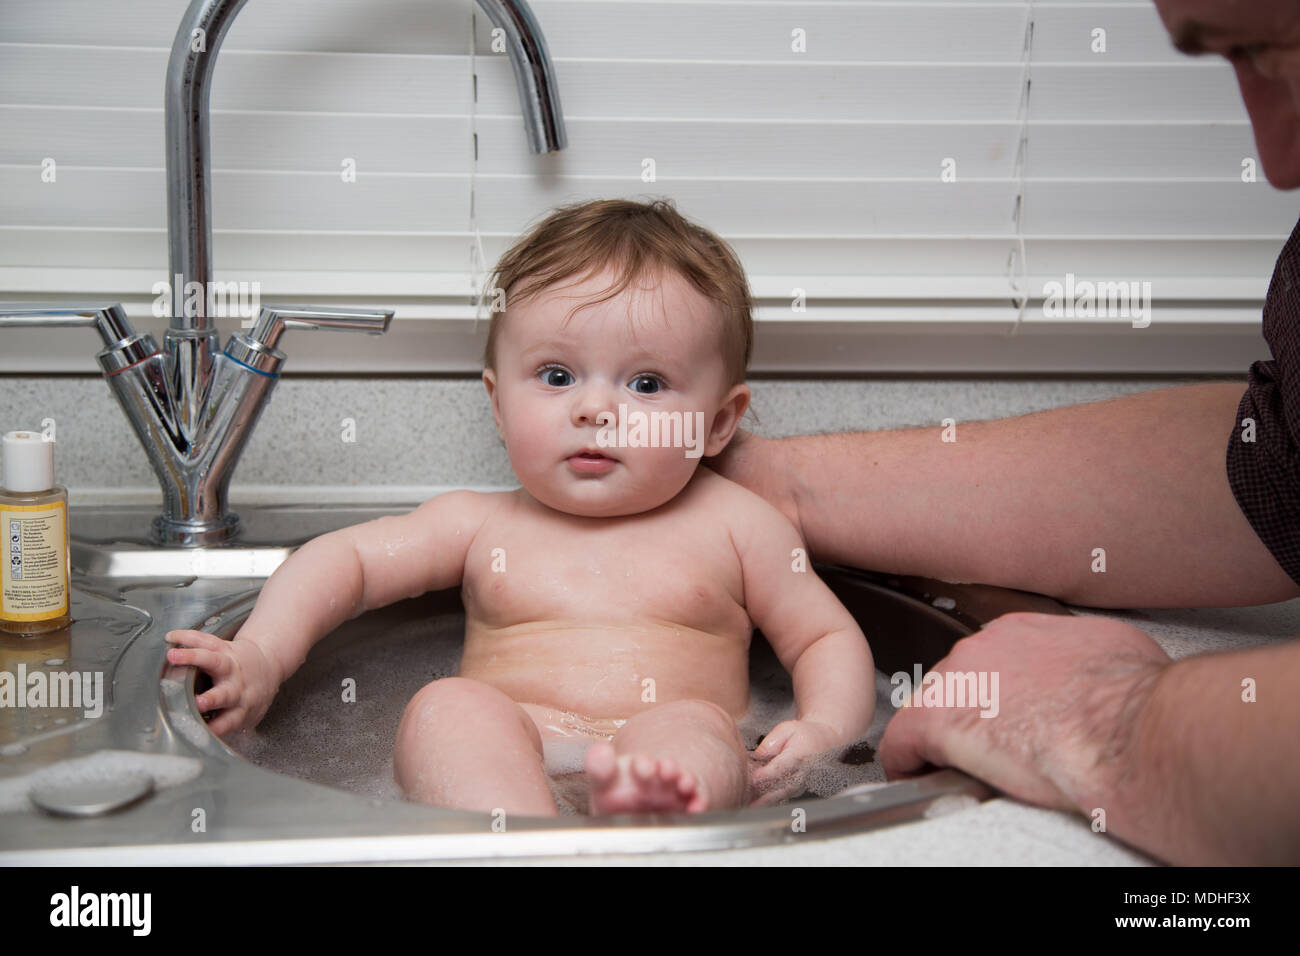 Dad Washing Baby In Kitchen Sink Stock Photo 180479262 Alamy